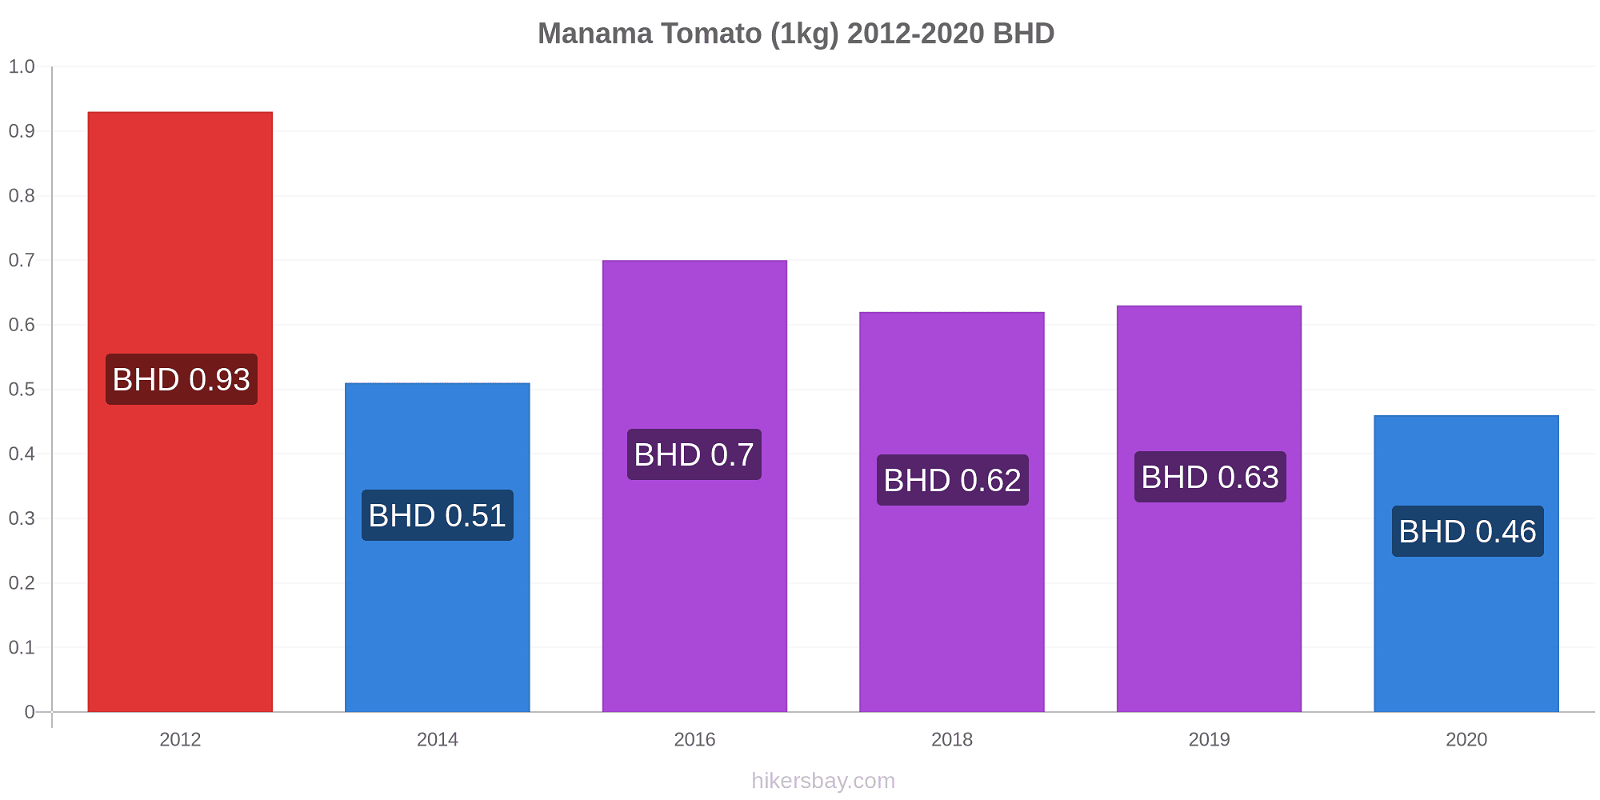 Manama price changes Tomato (1kg) hikersbay.com